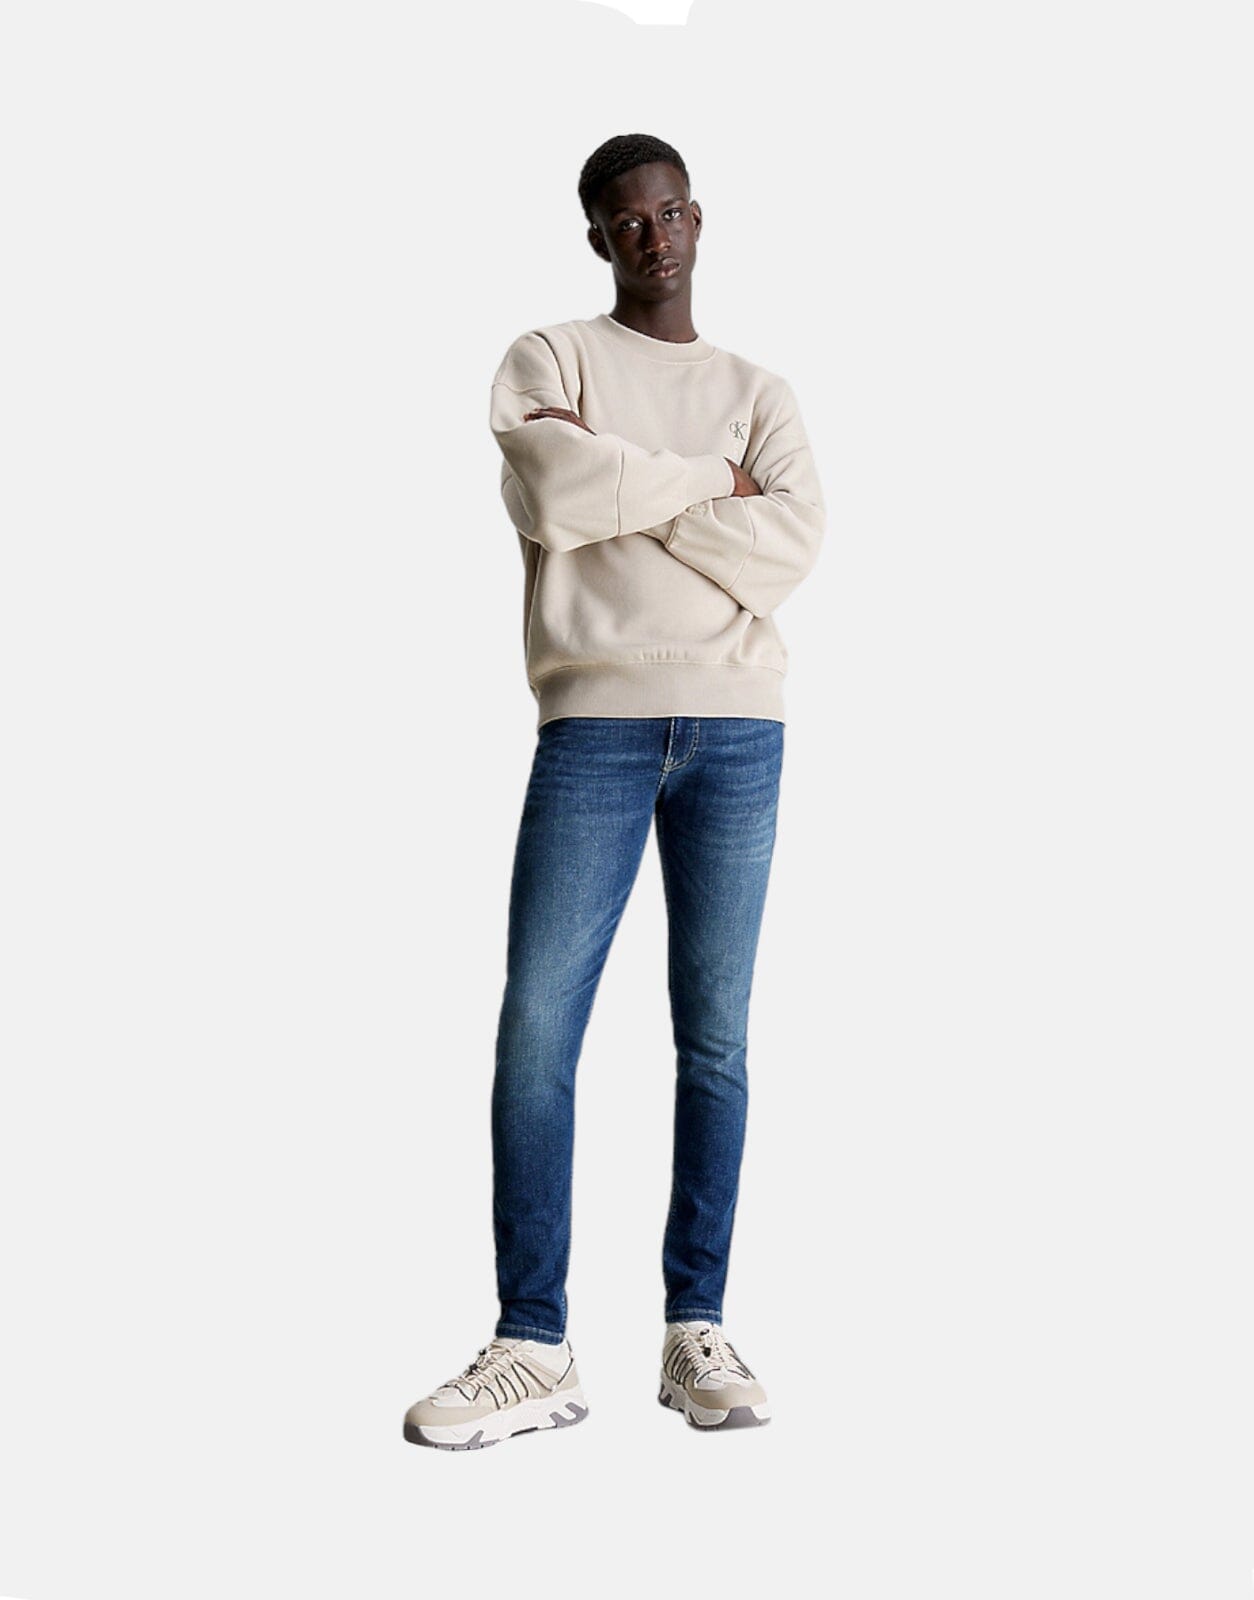 Calvin Klein Skinny Mid Wash Jeans - Subwear